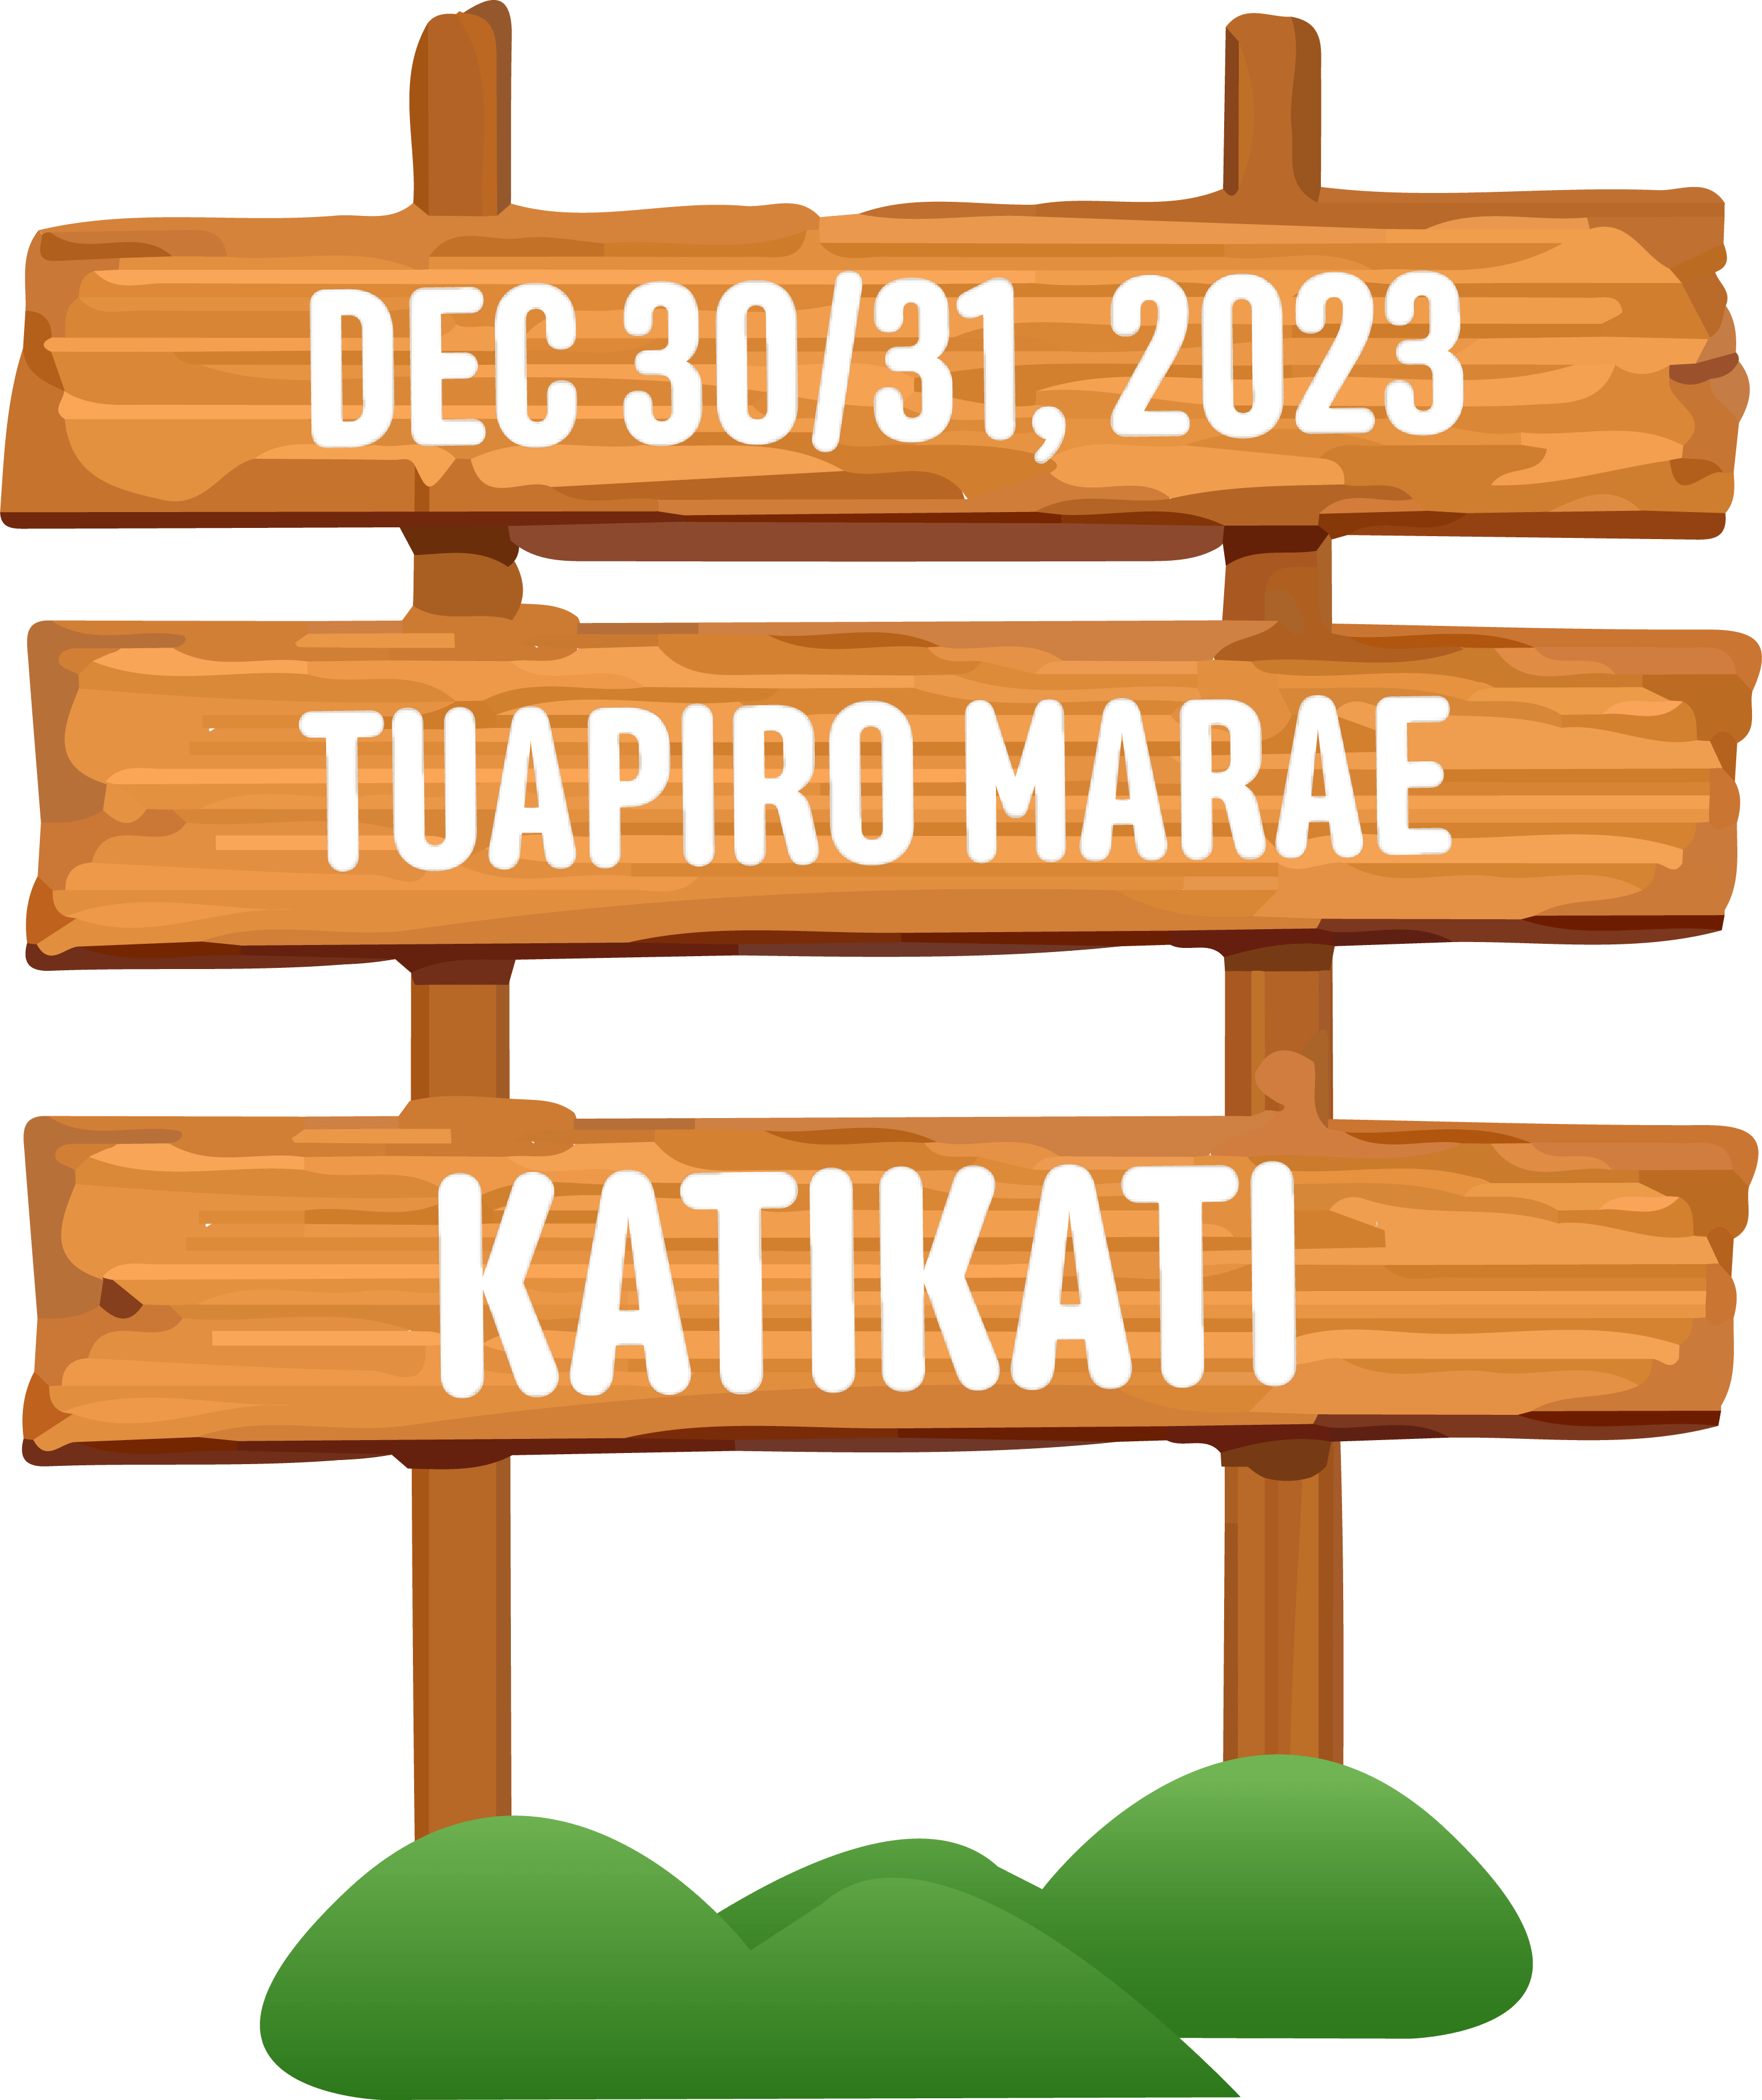 Dec 30/31. 2023 at Tuapiro Marae, Katikati